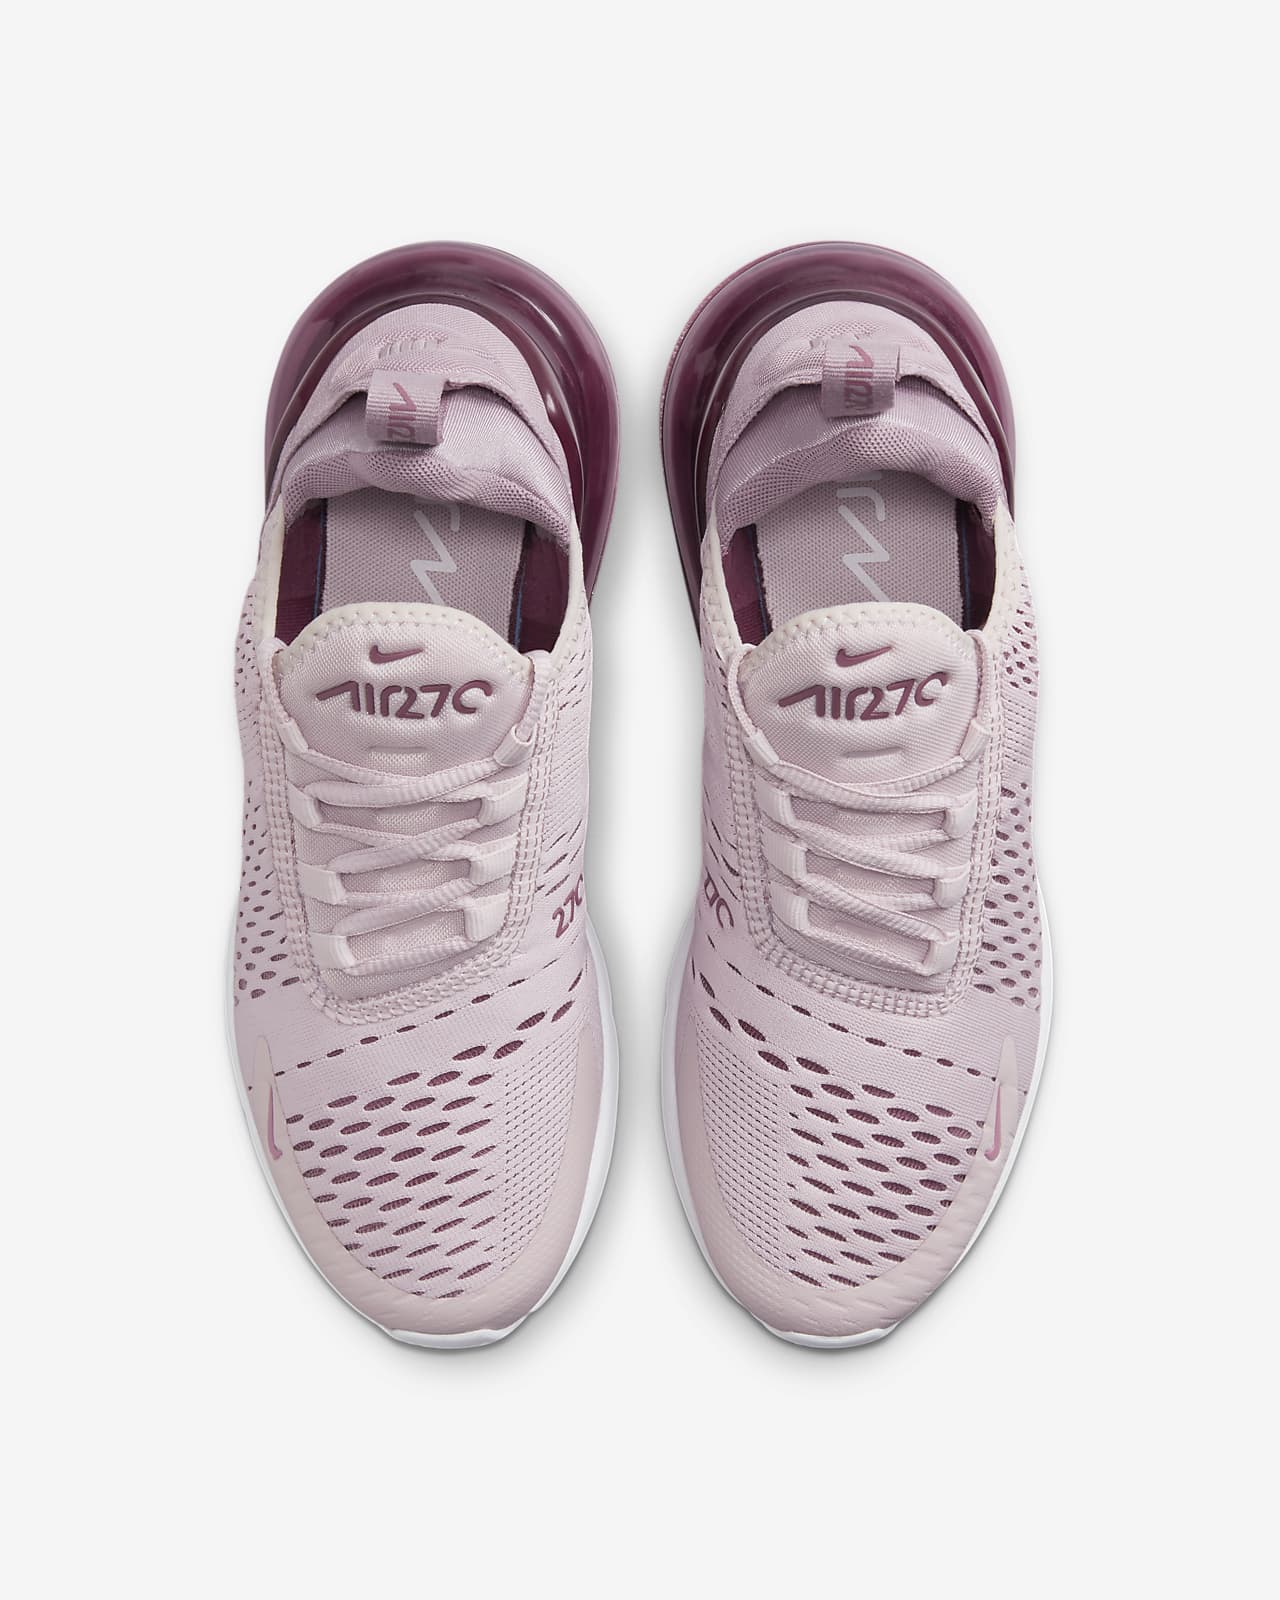 Nike Air Max 270 Women's Shoes. LU